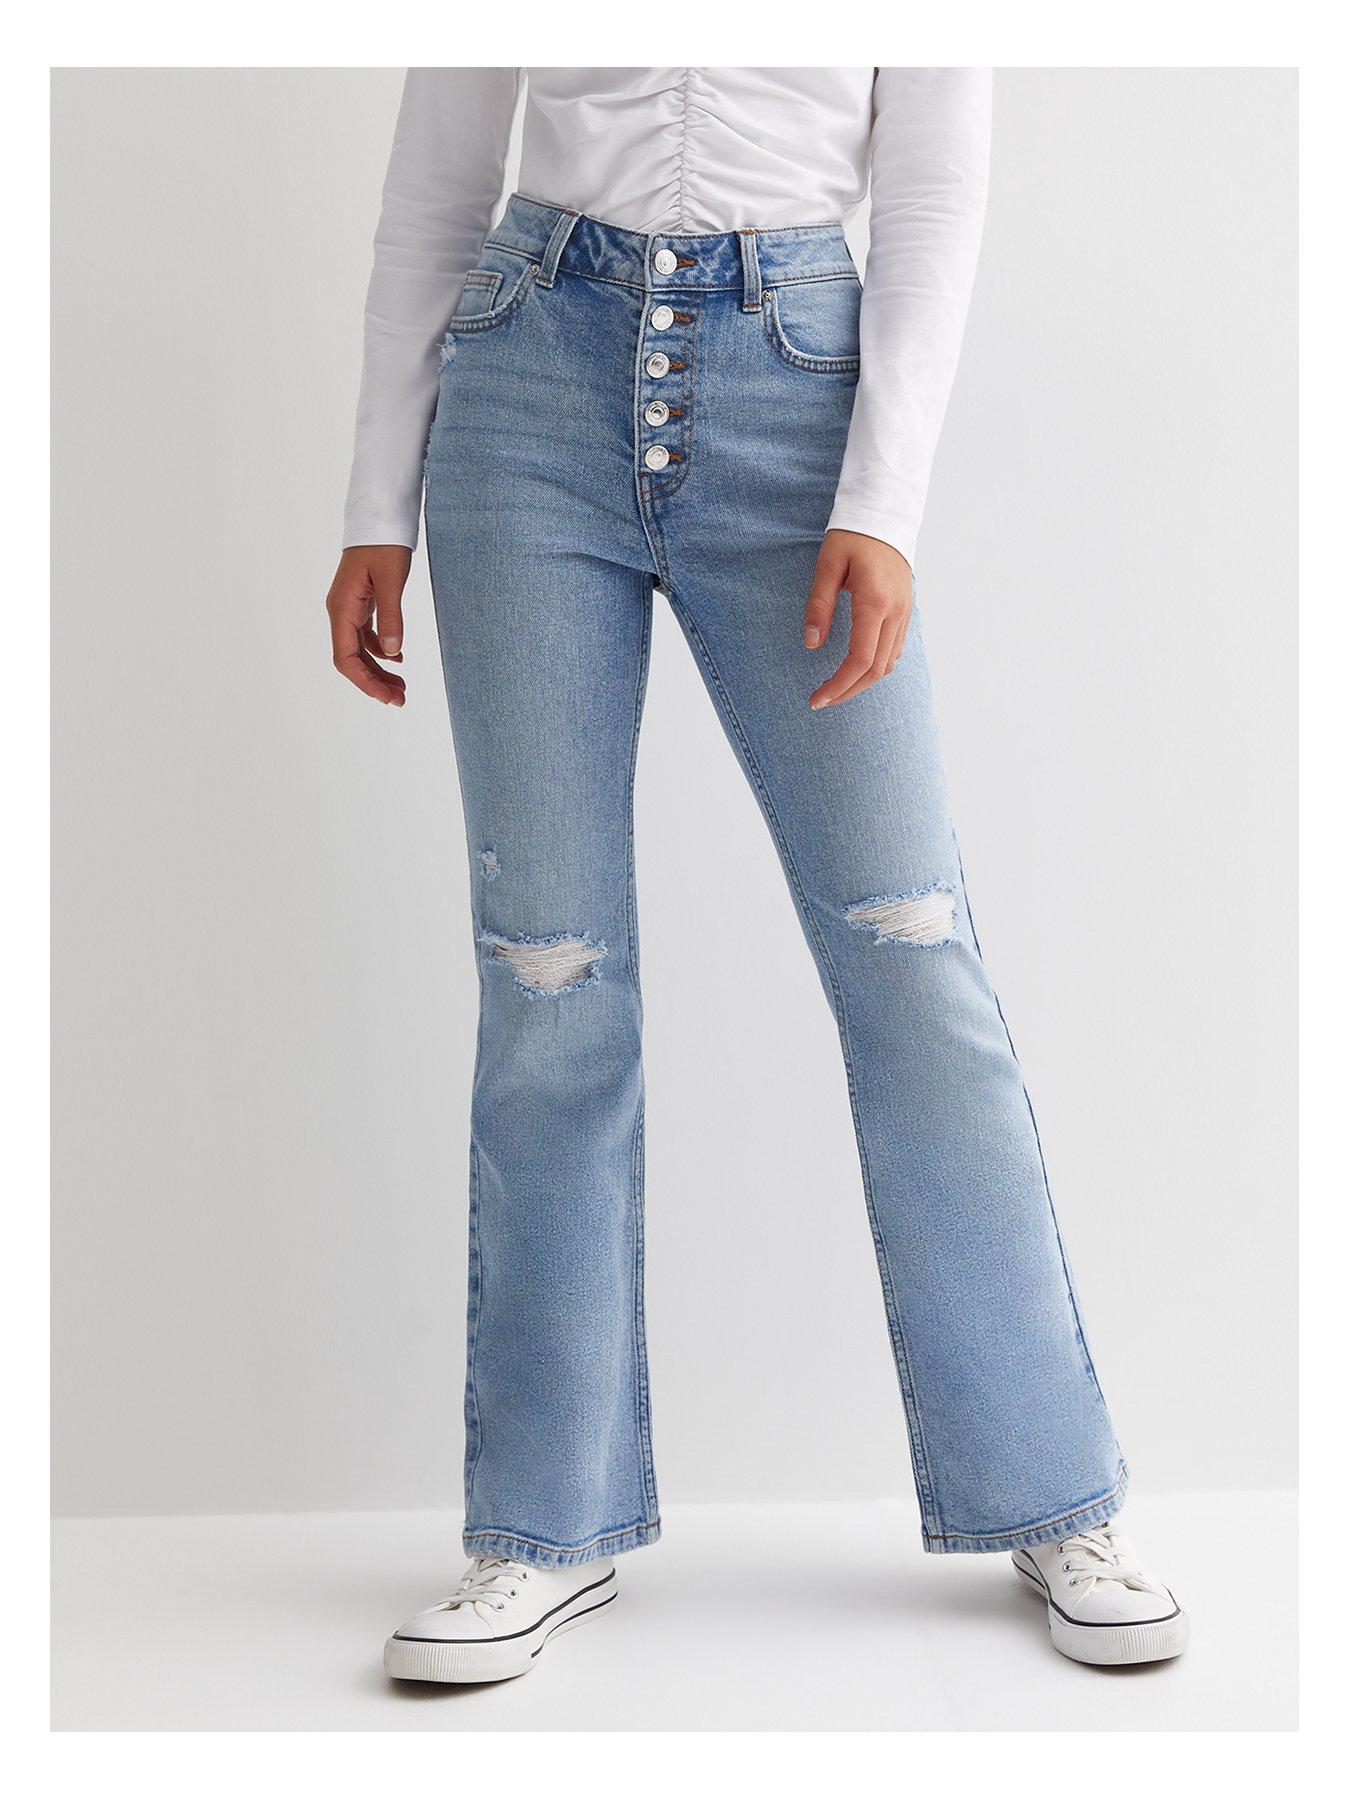 New Look 915 Girls Blue Denim Wide Leg Cargo Jeans